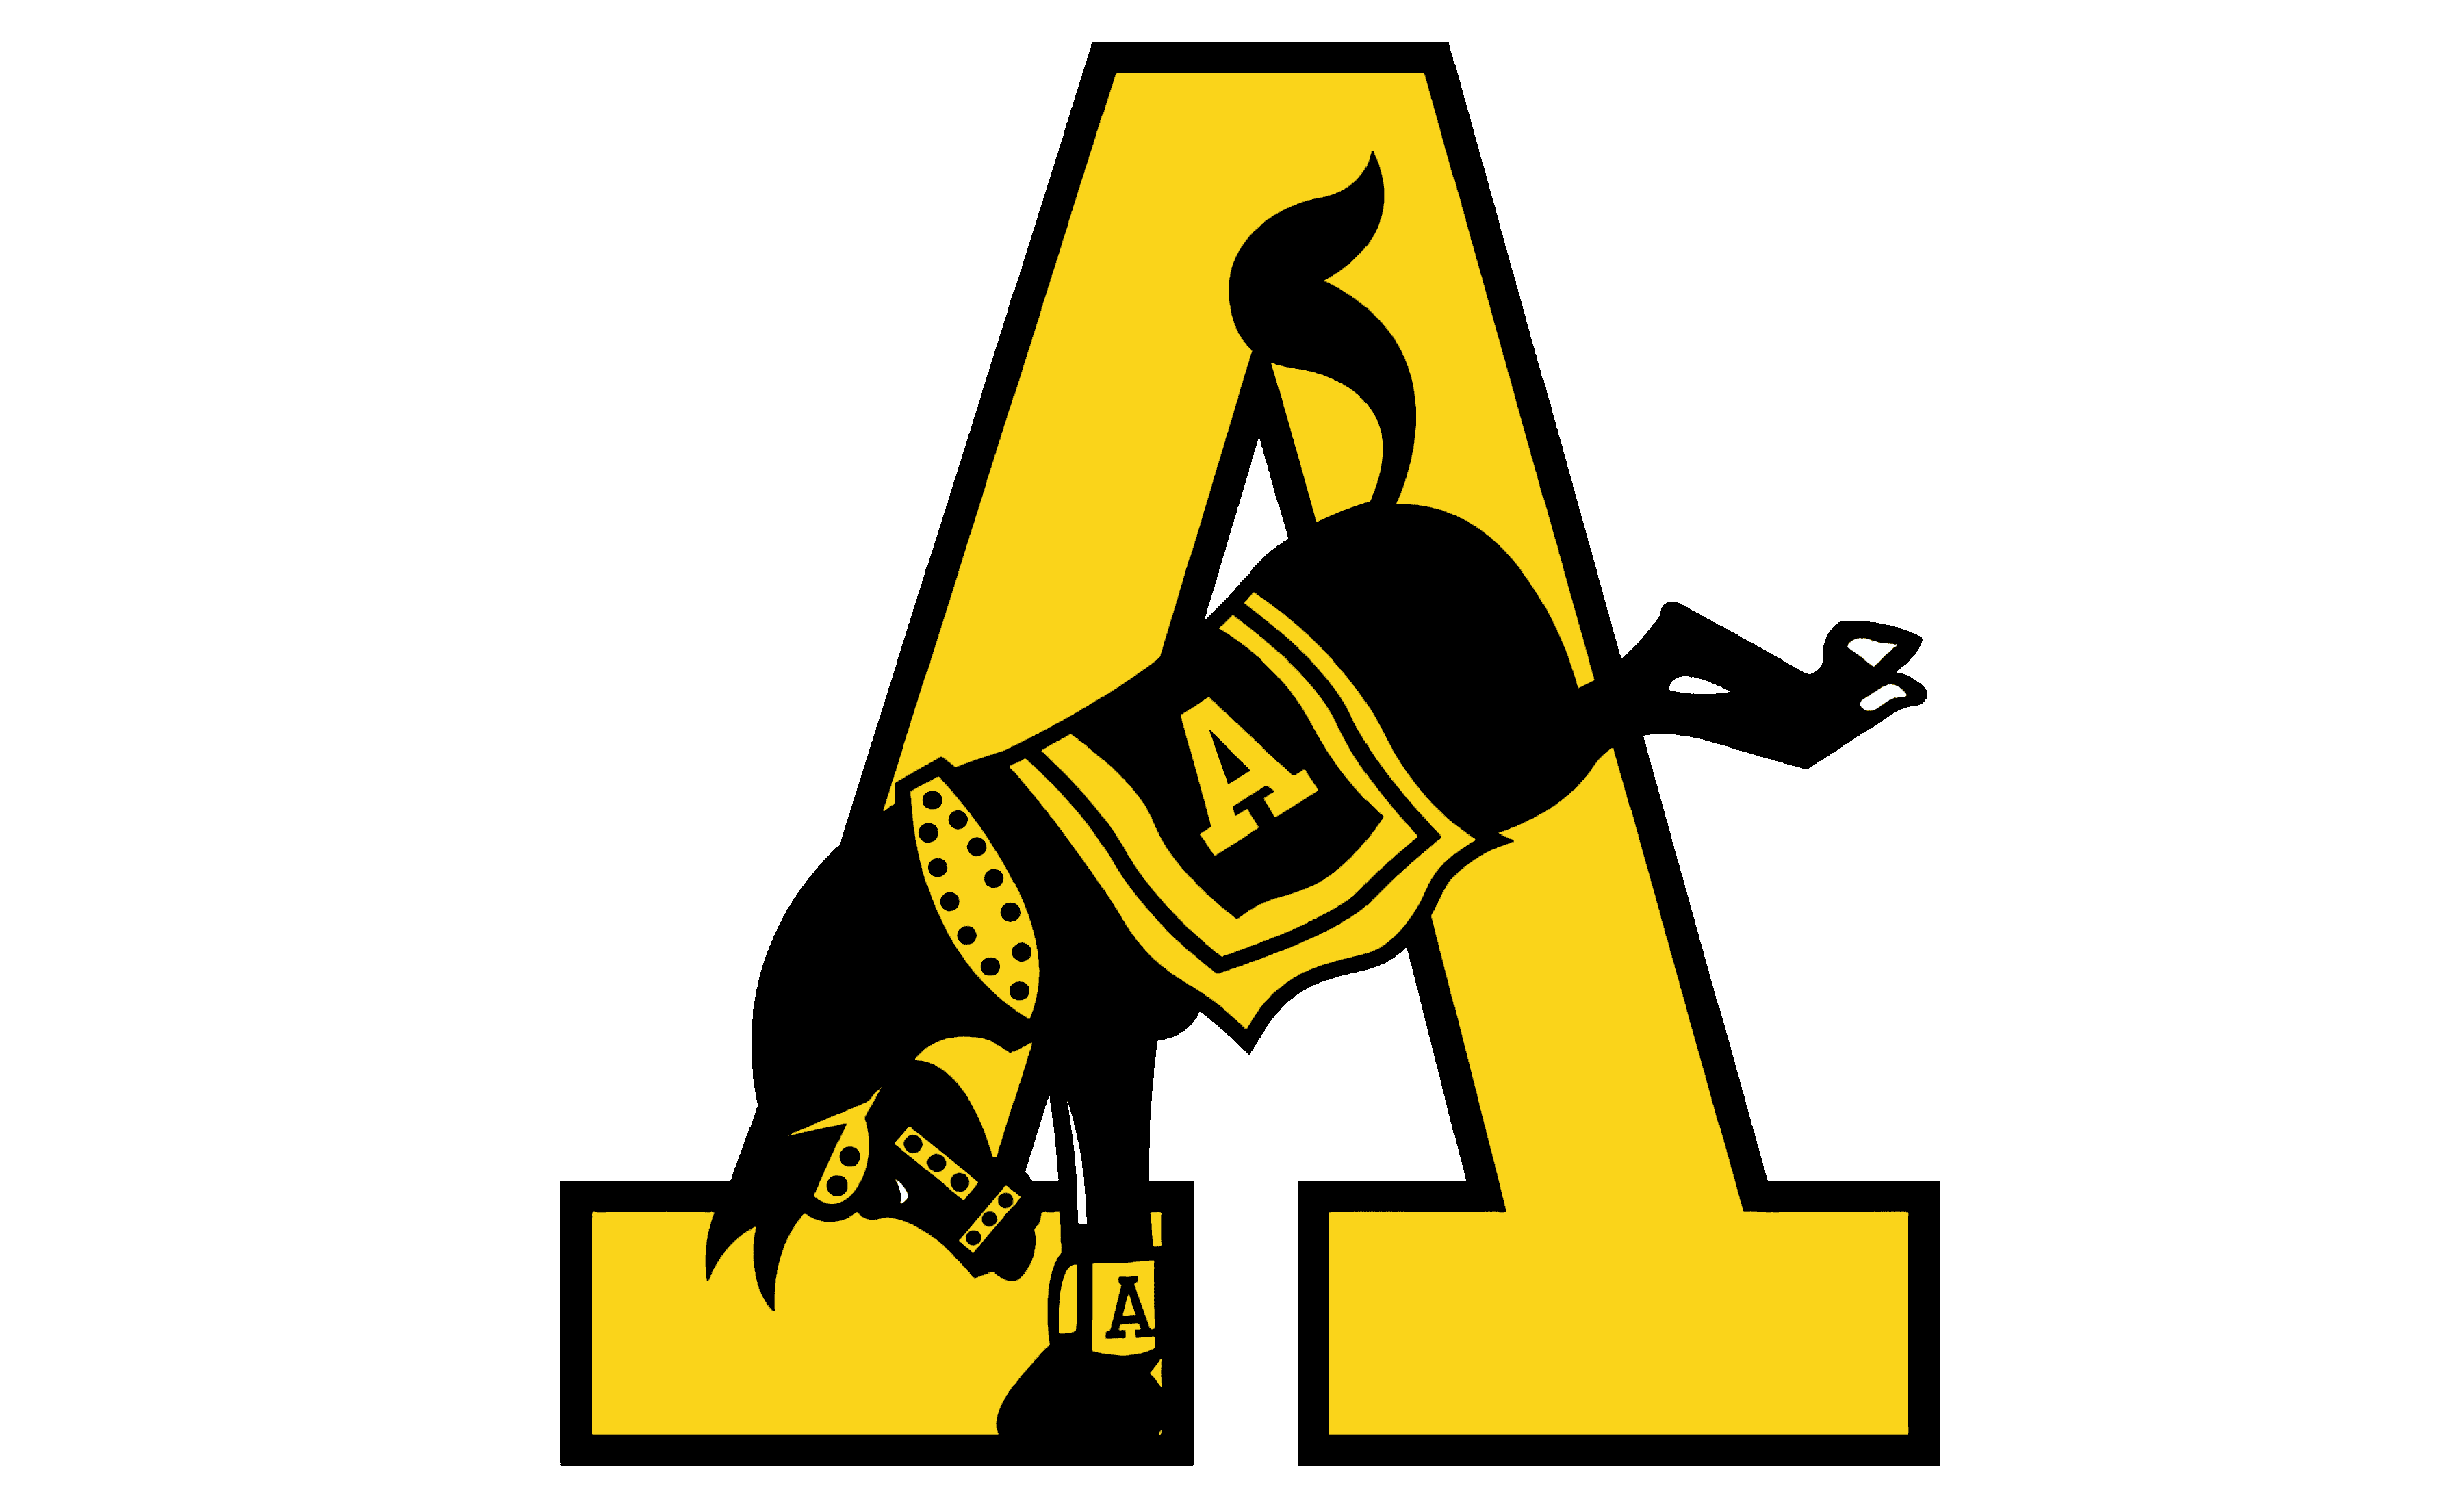 army football logo 2022